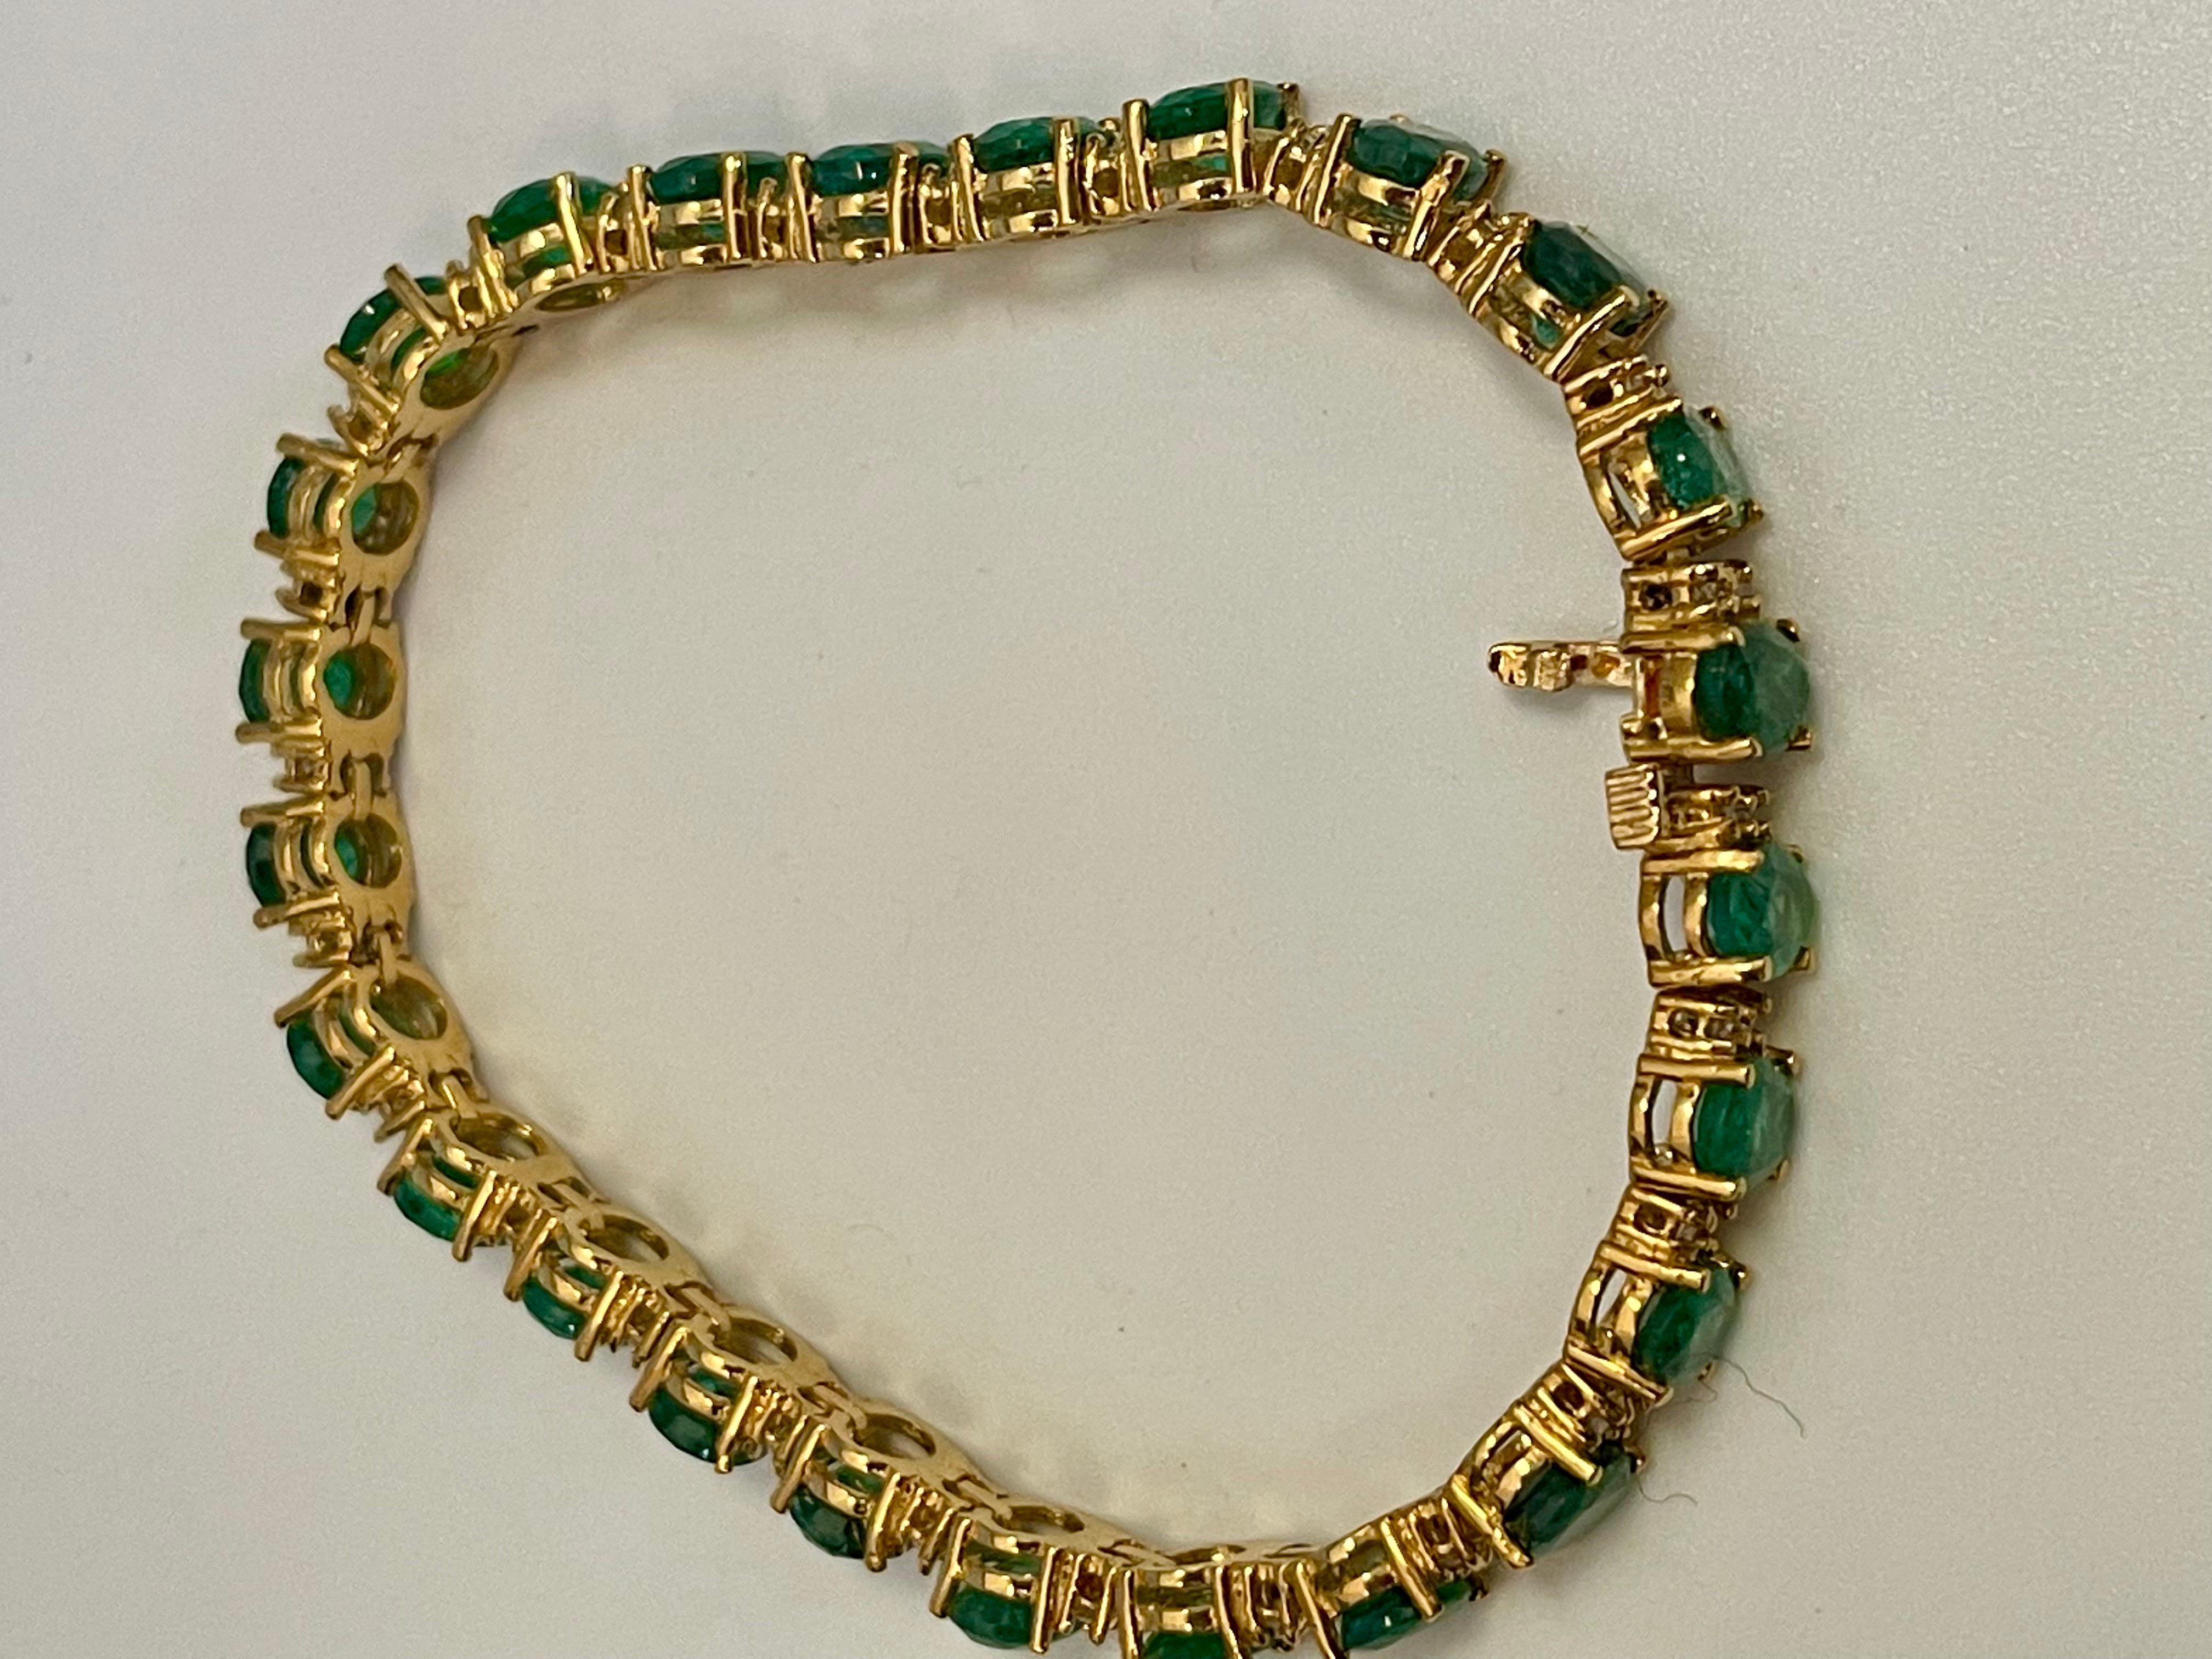 25 Carat Natural Emerald & 1.8 Carat Diamond Tennis Bracelet 18 Kt Yellow Gold For Sale 1